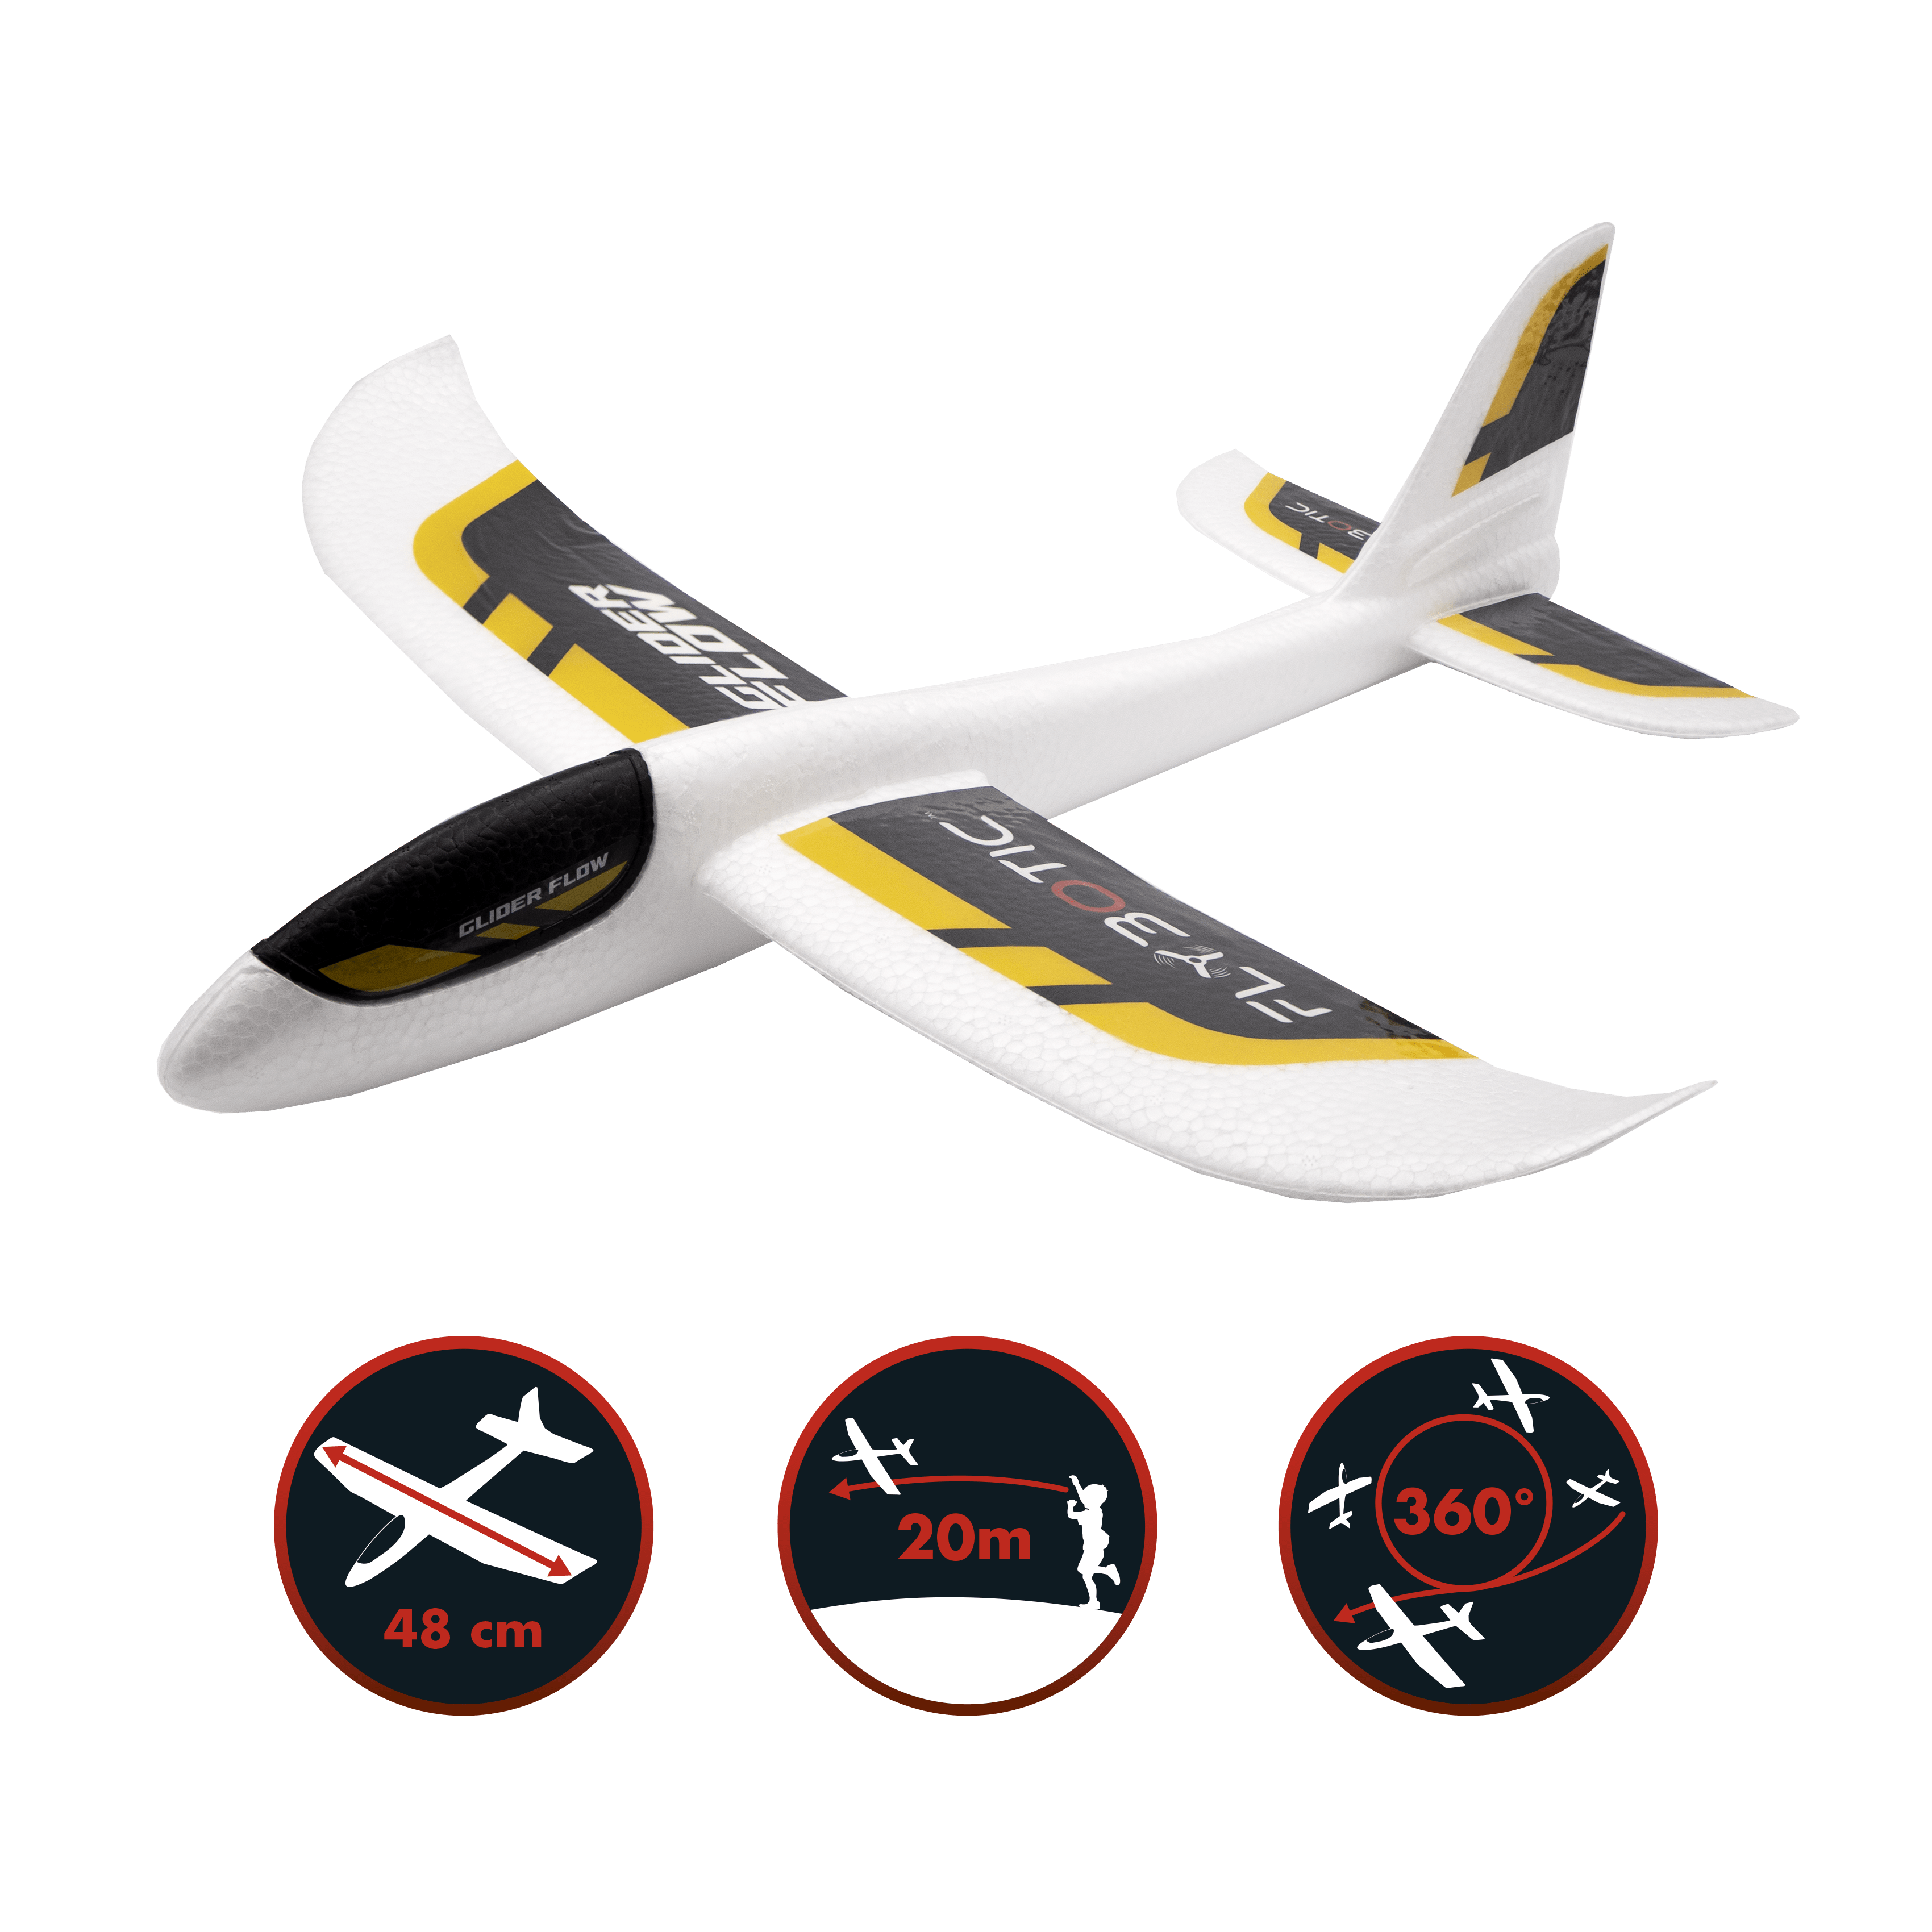 Avion télécommandé Flybotic X-Twin Evo